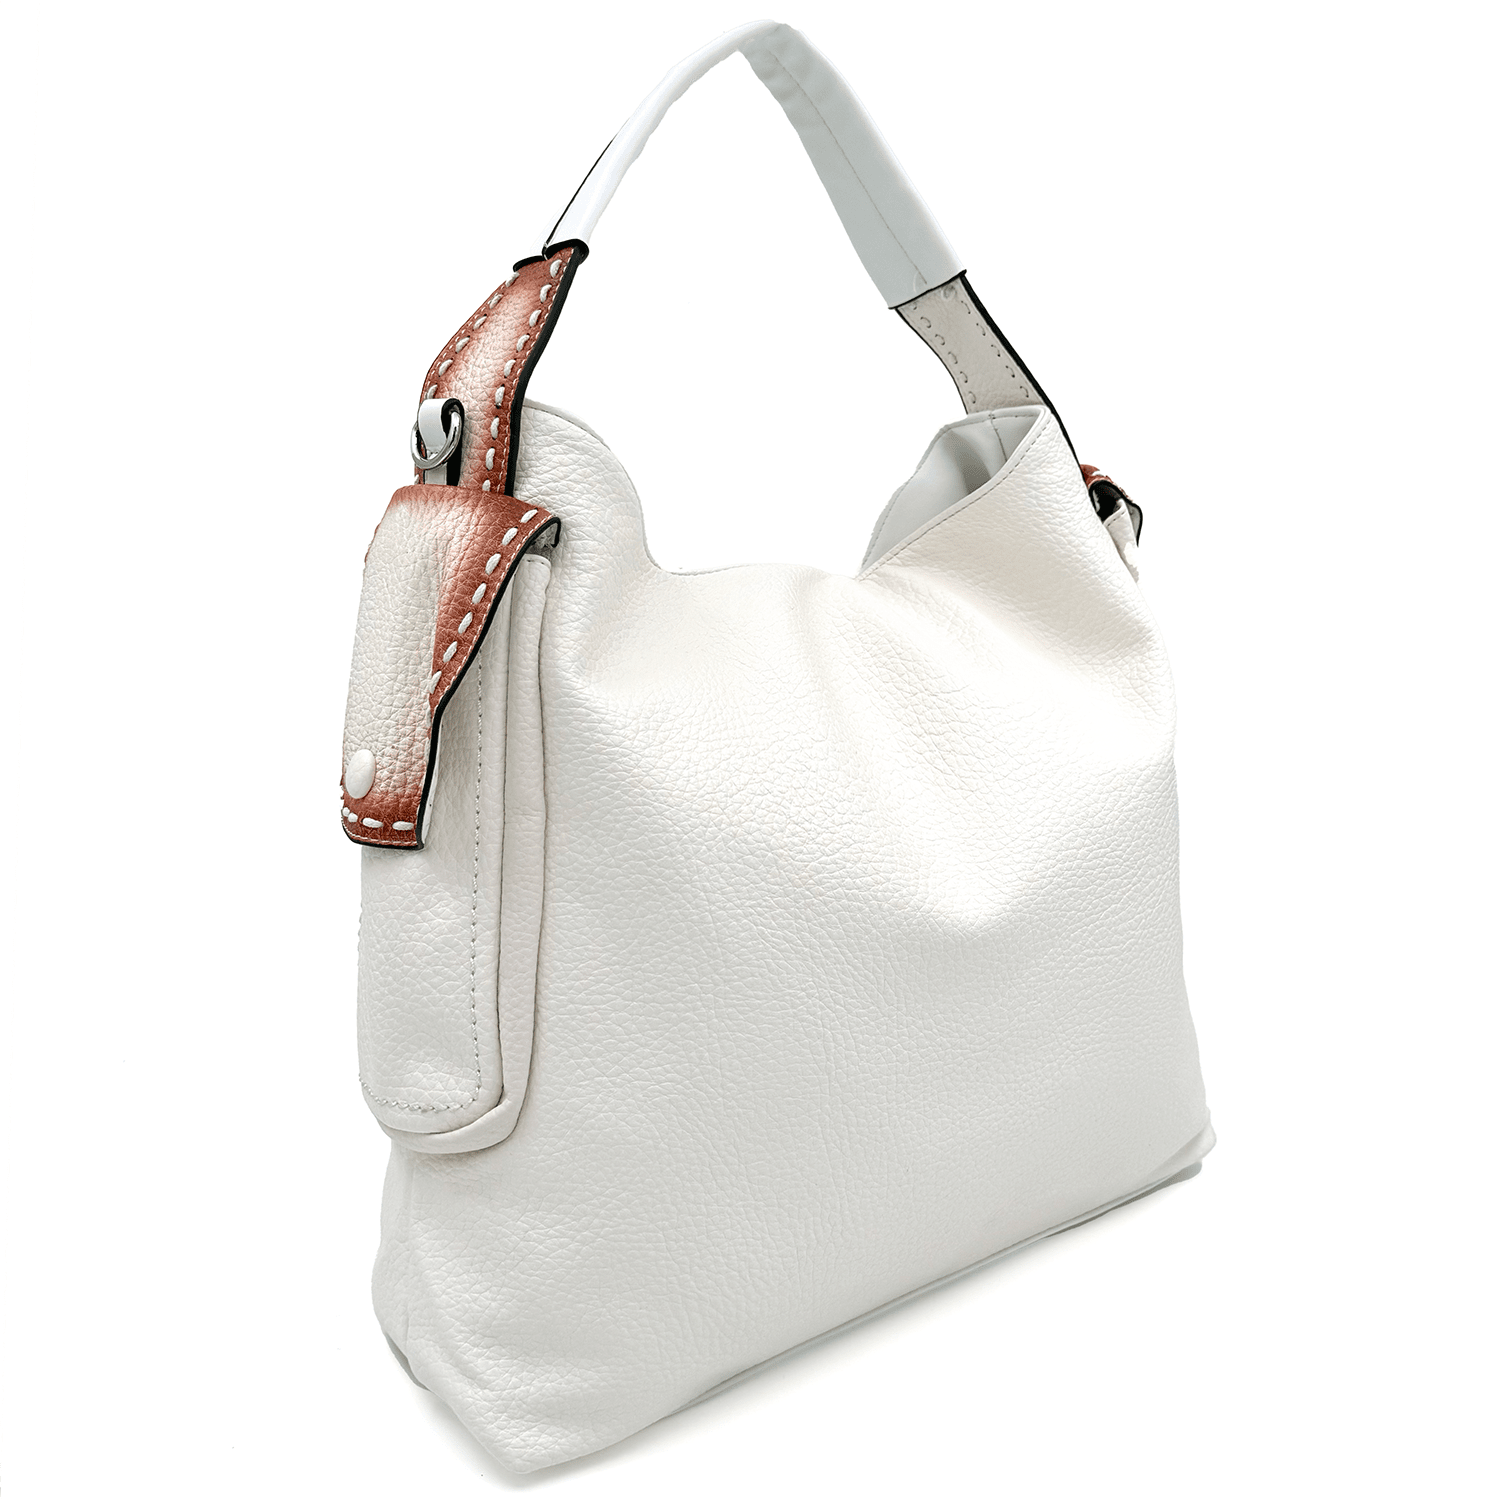 Дамска чанта тип торба с опушен ефект - бяла